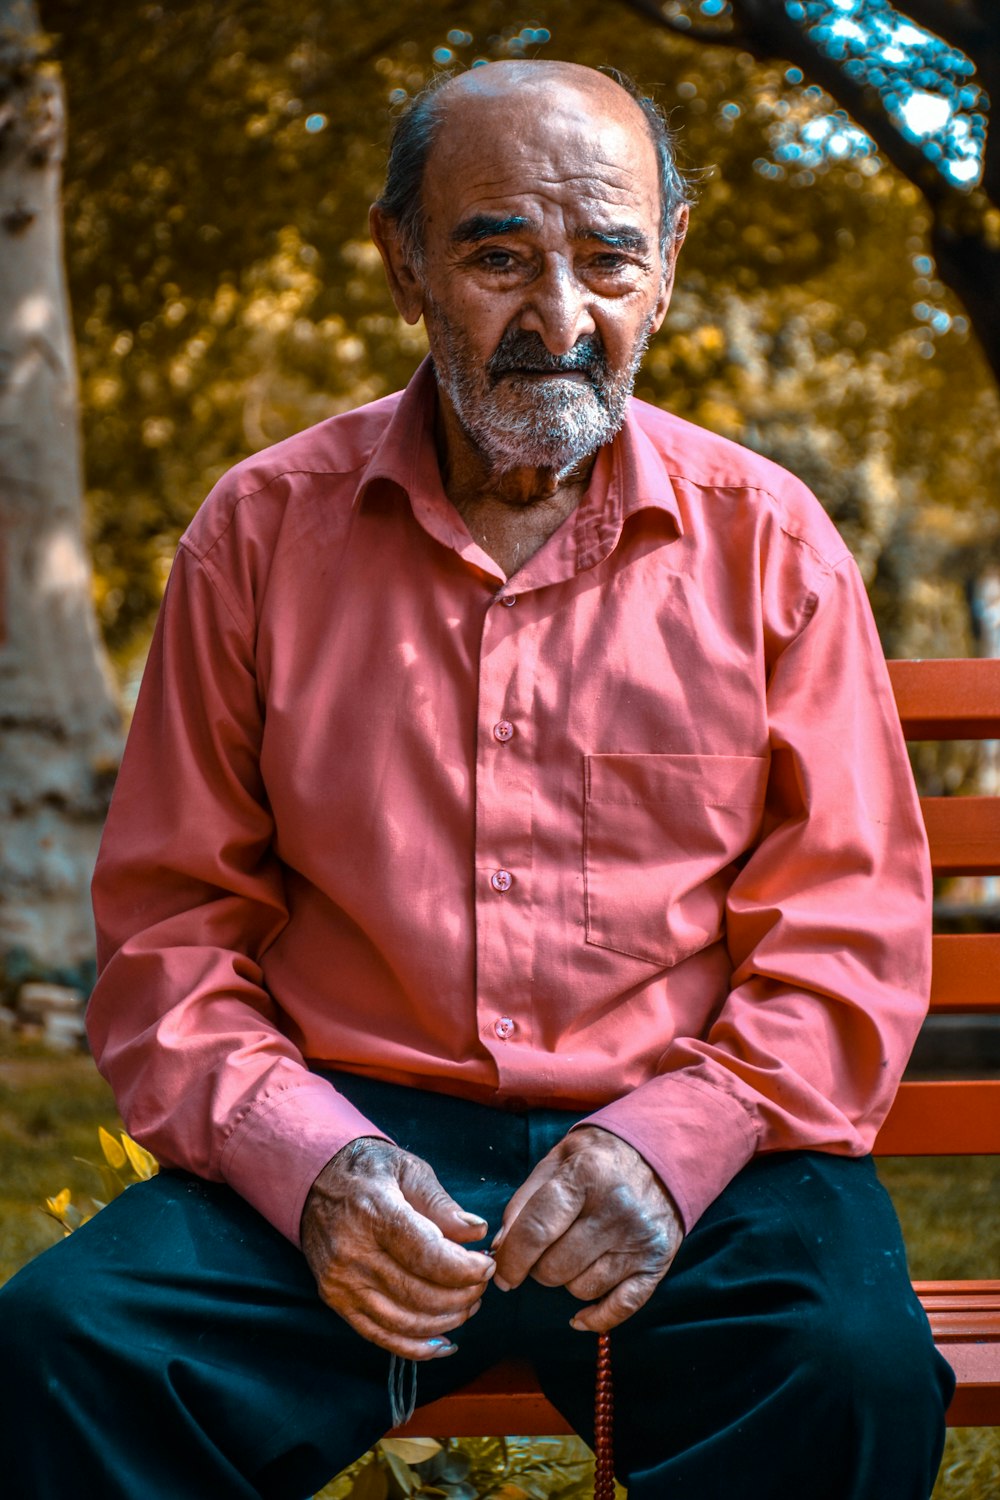 man in brown dress shirt sitting on brown wooden bench during daytime